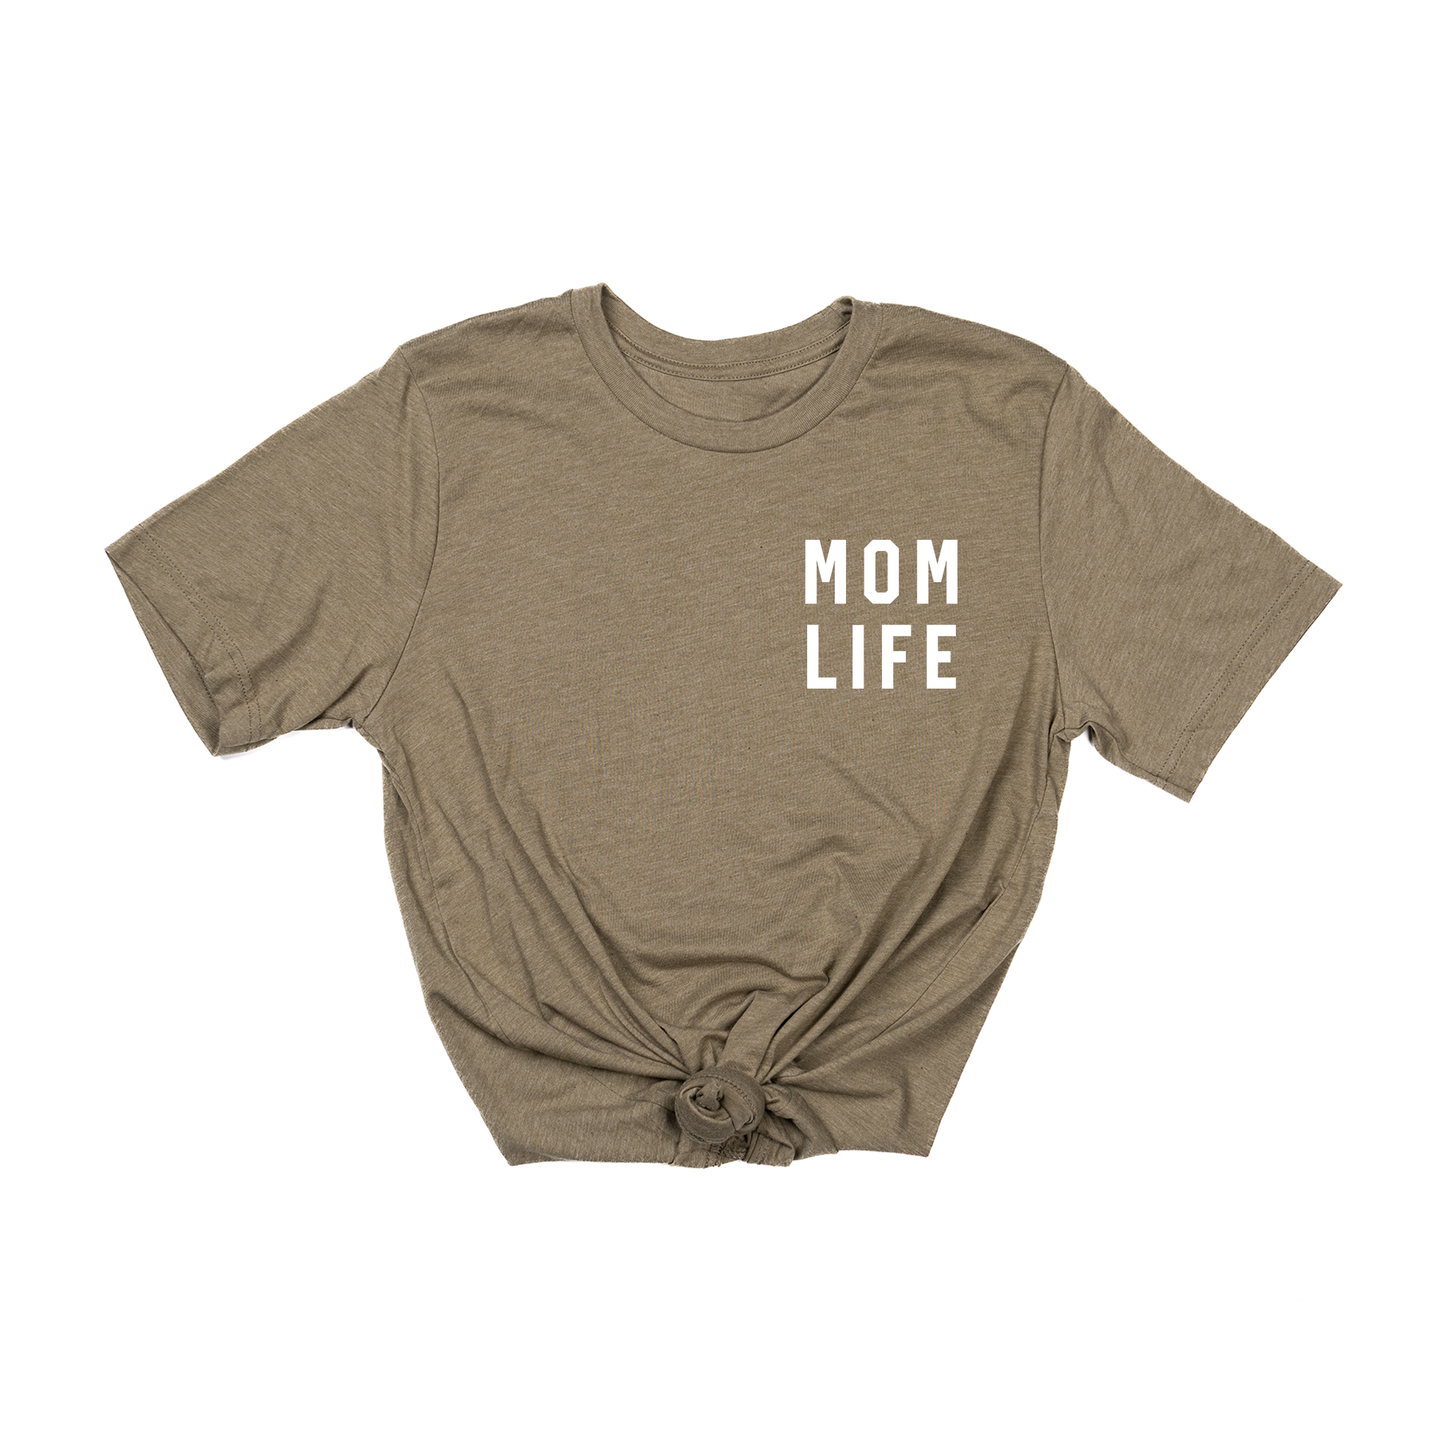 Mom Life (Pocket, White) - Tee (Olive)